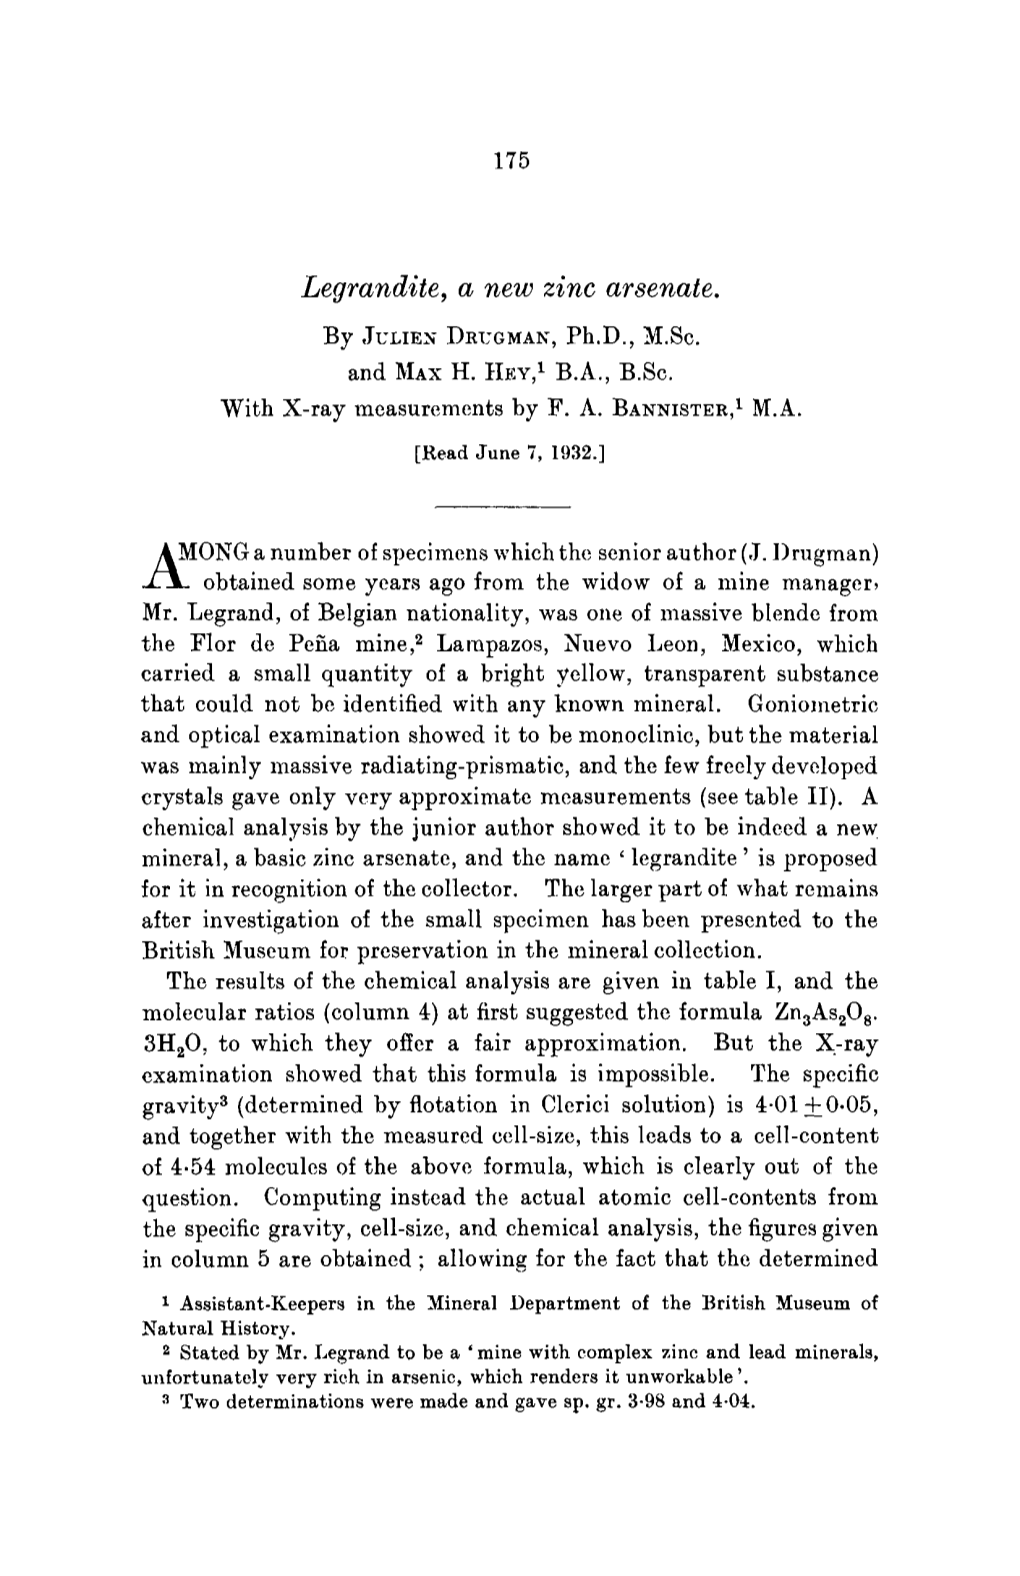 Legrandite, a New Zinc Arsenate. by JULIEN DRISGMAI~',Ph.D., M.Sc